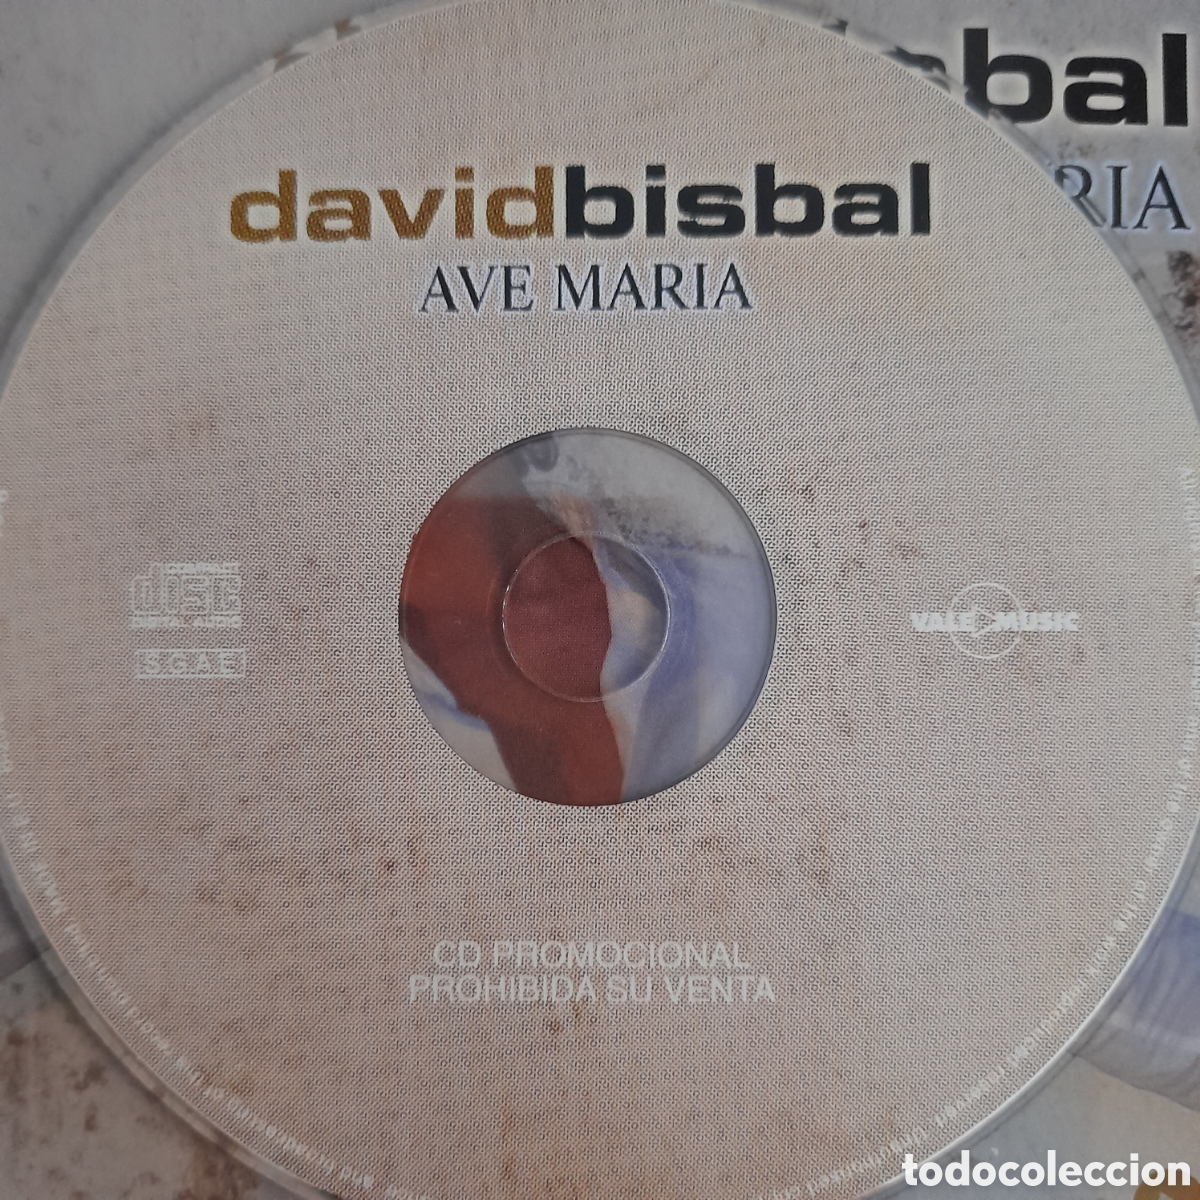 ot,operacion triunfo, lote de cds,david bisbal, - Buy CD's of Pop Music on  todocoleccion